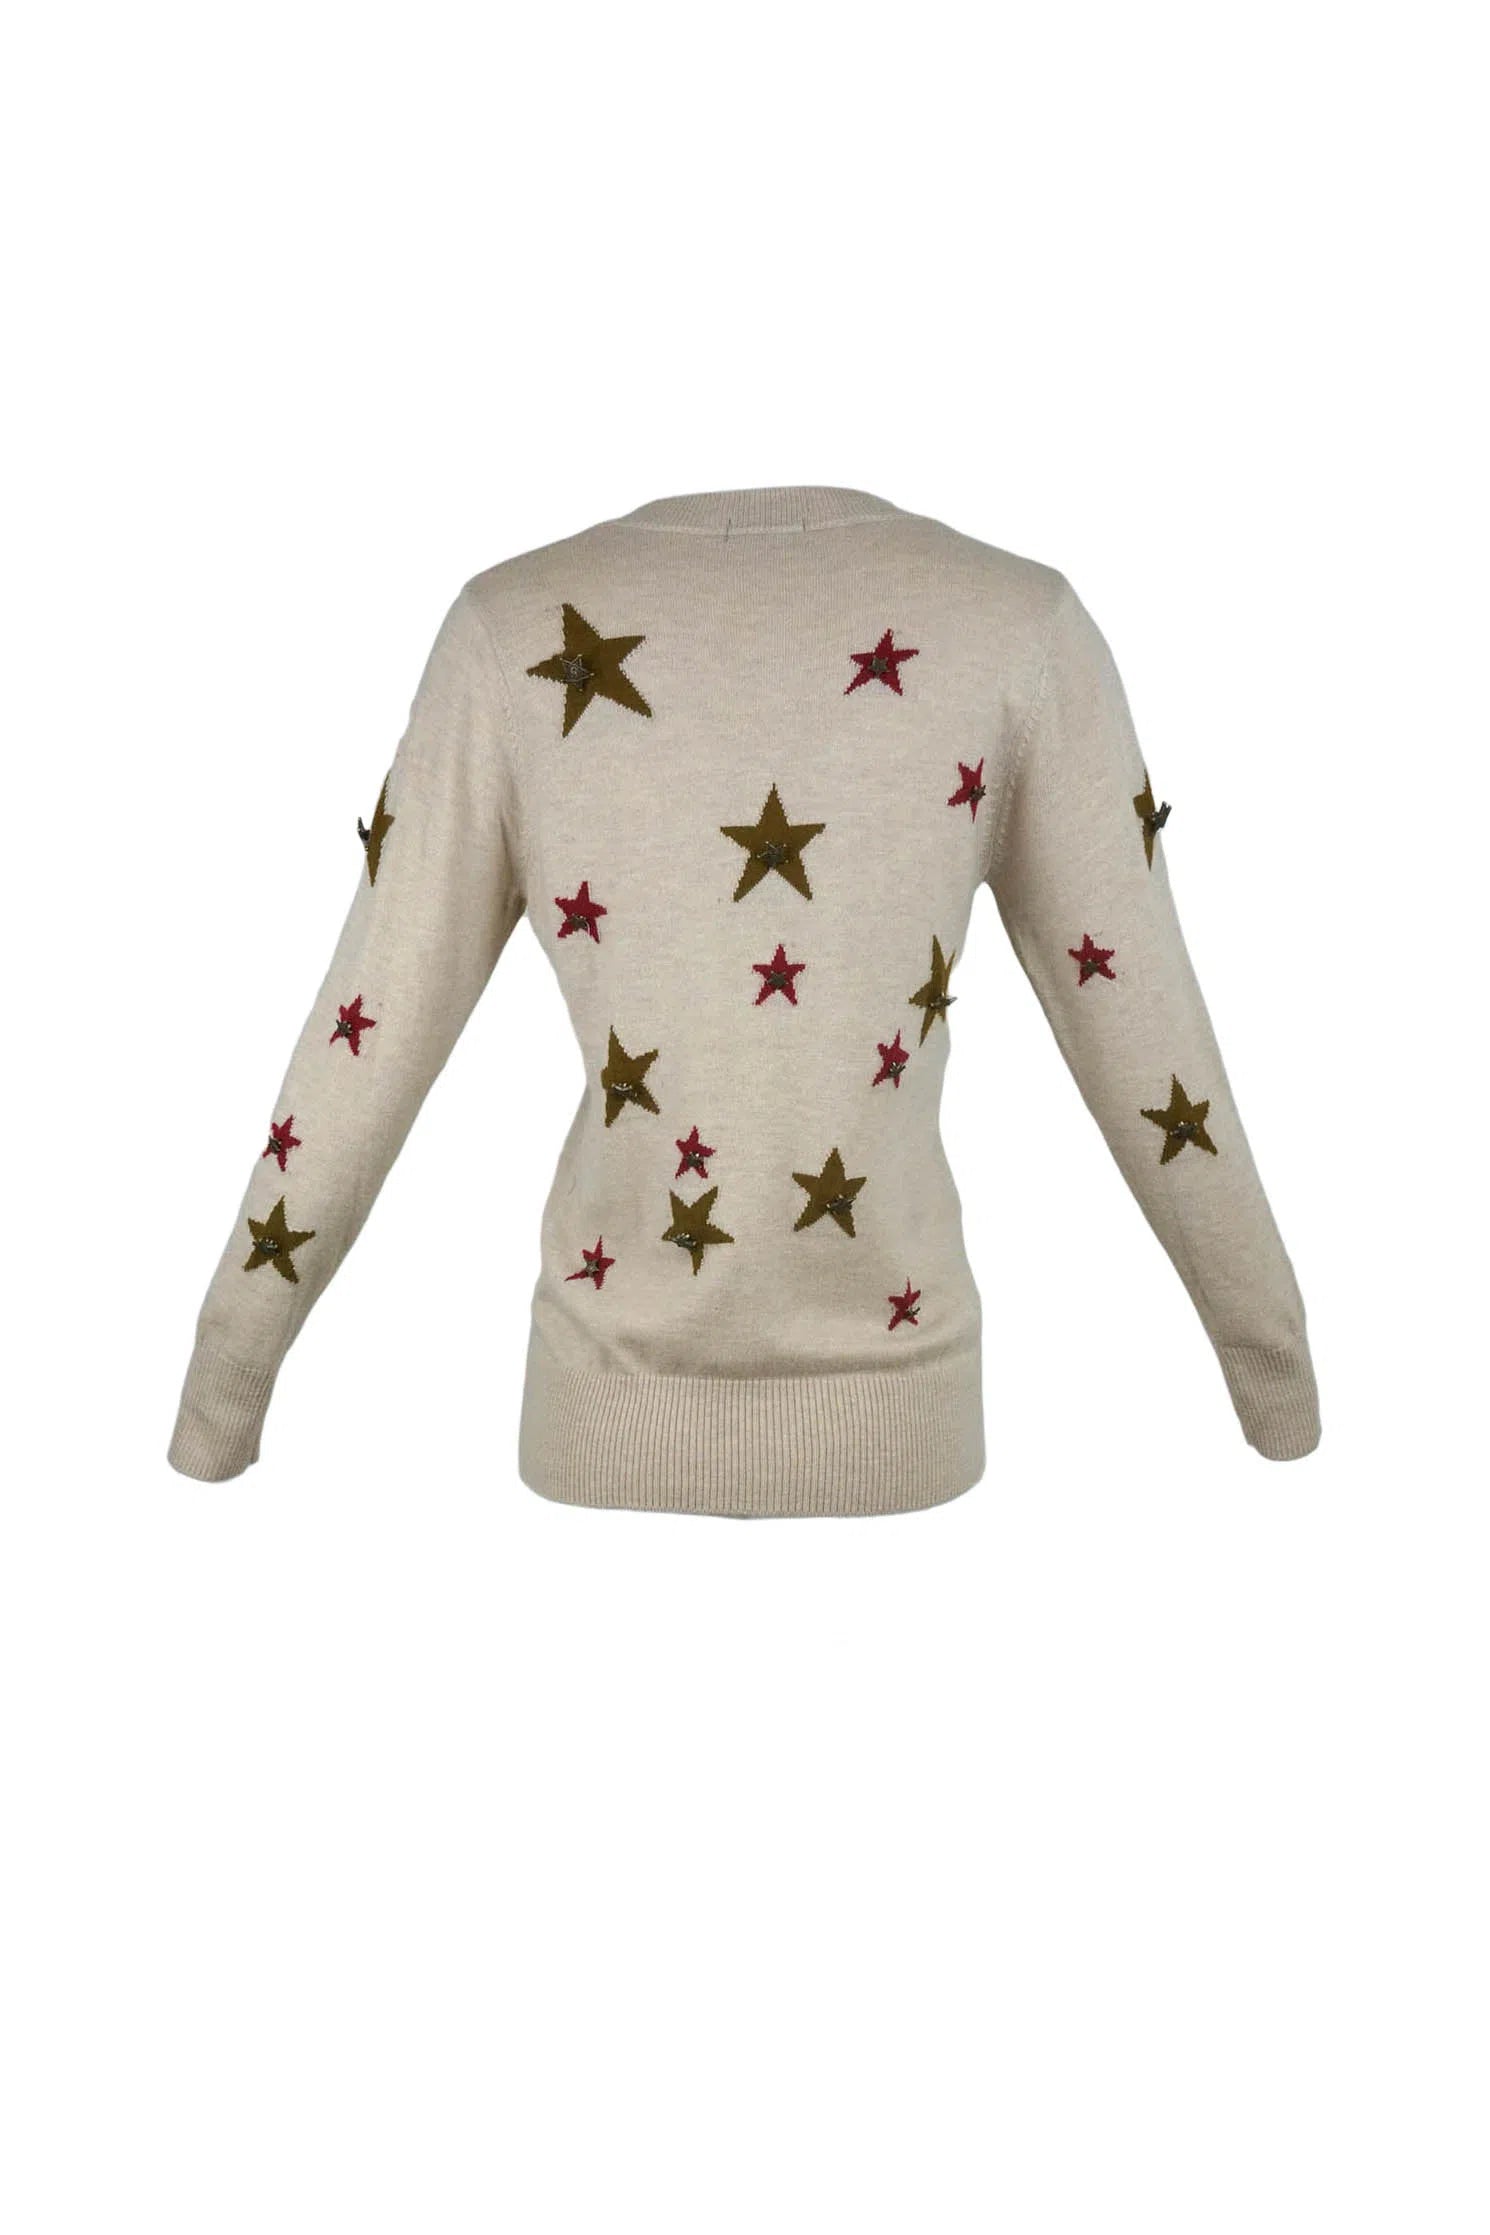 Chanel Métiers d'Art Paris‐Dallas Star Sweater 2014 - Foxy Couture Carmel